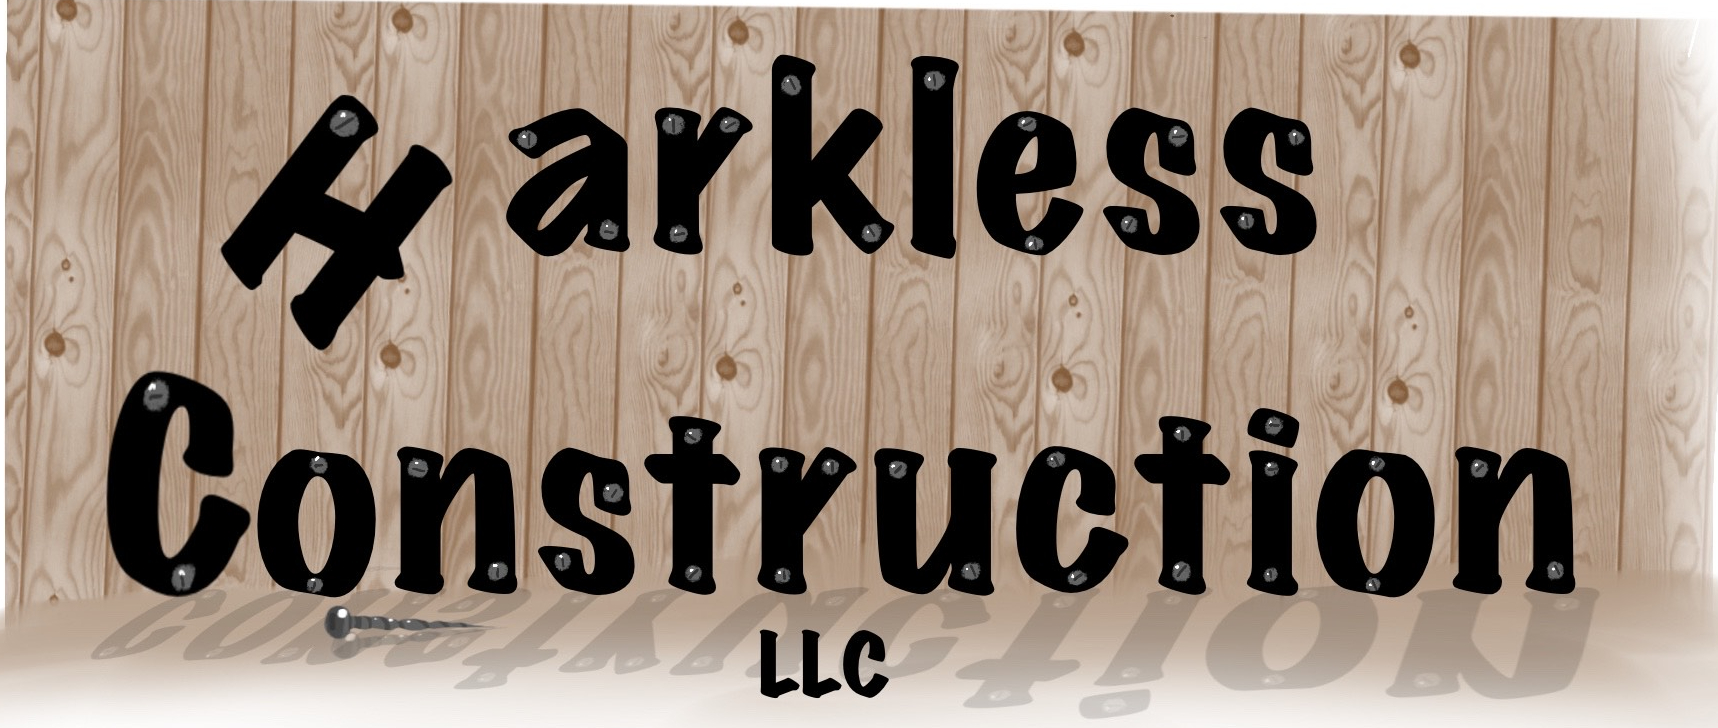 Harkless Construction LLC Logo